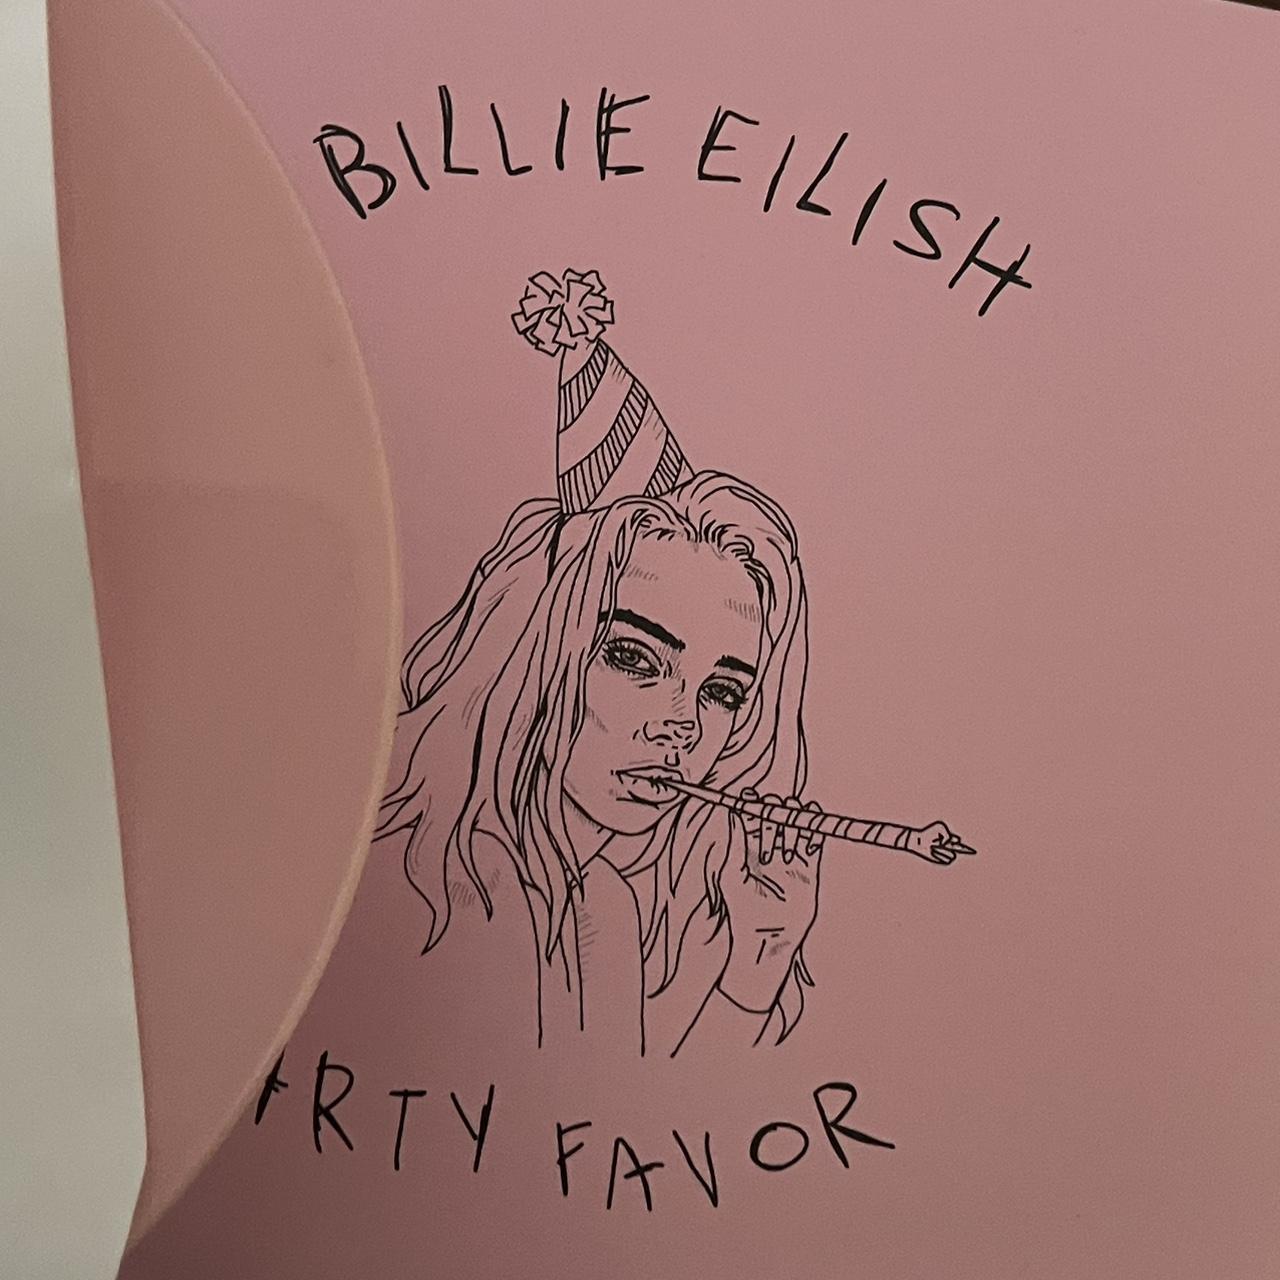 Billie Eilish - Party Favor/Hot Line Bling [Pink Vinyl Single]